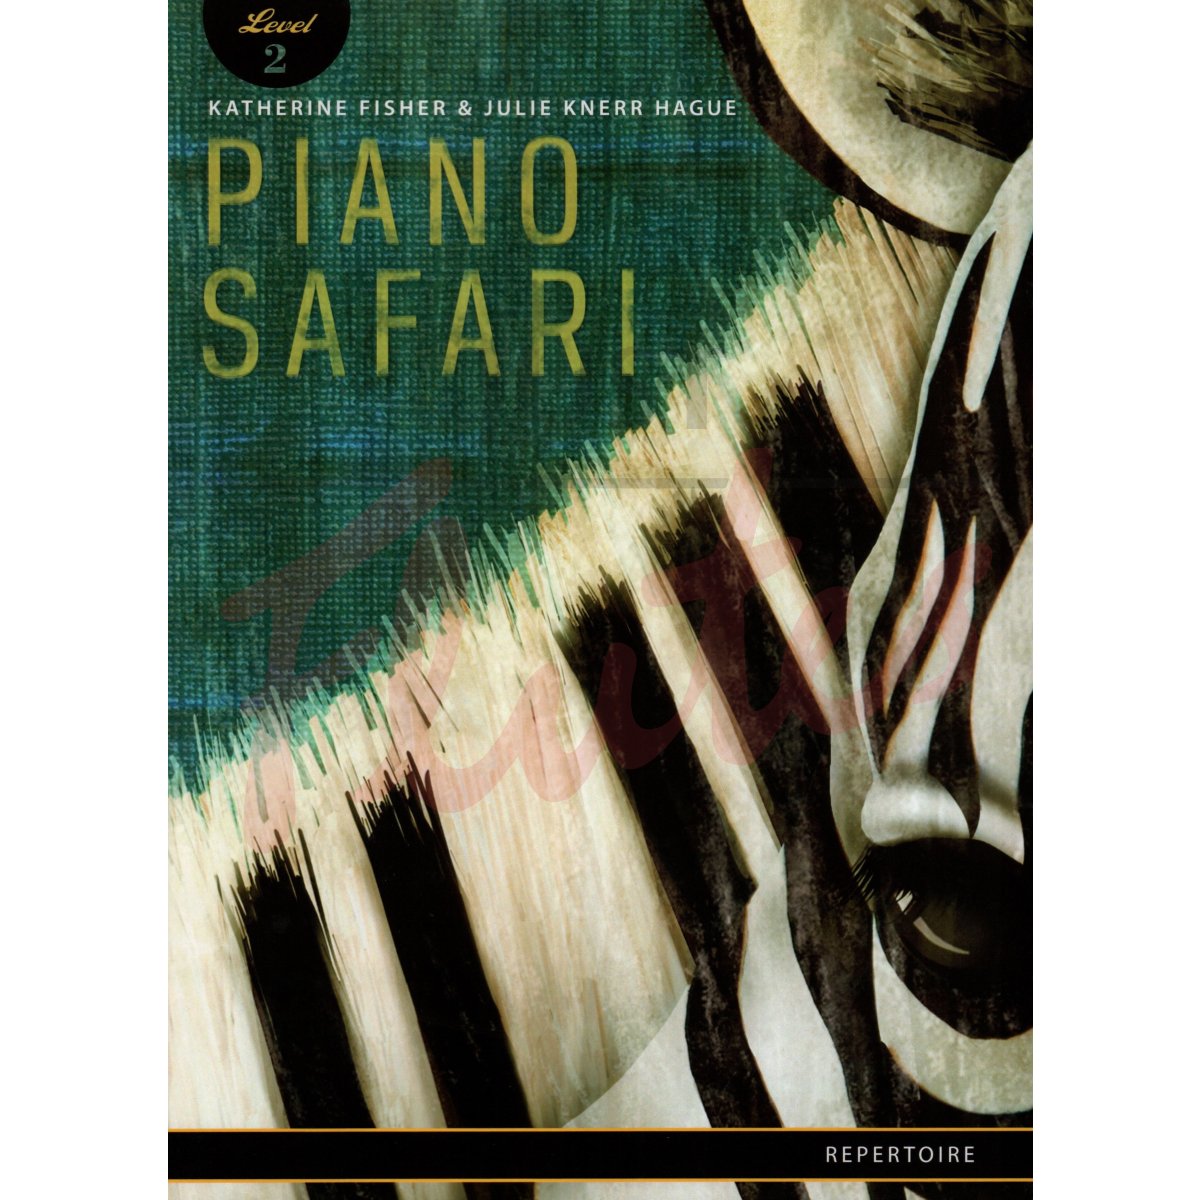 Piano Safari Repertoire Book 2